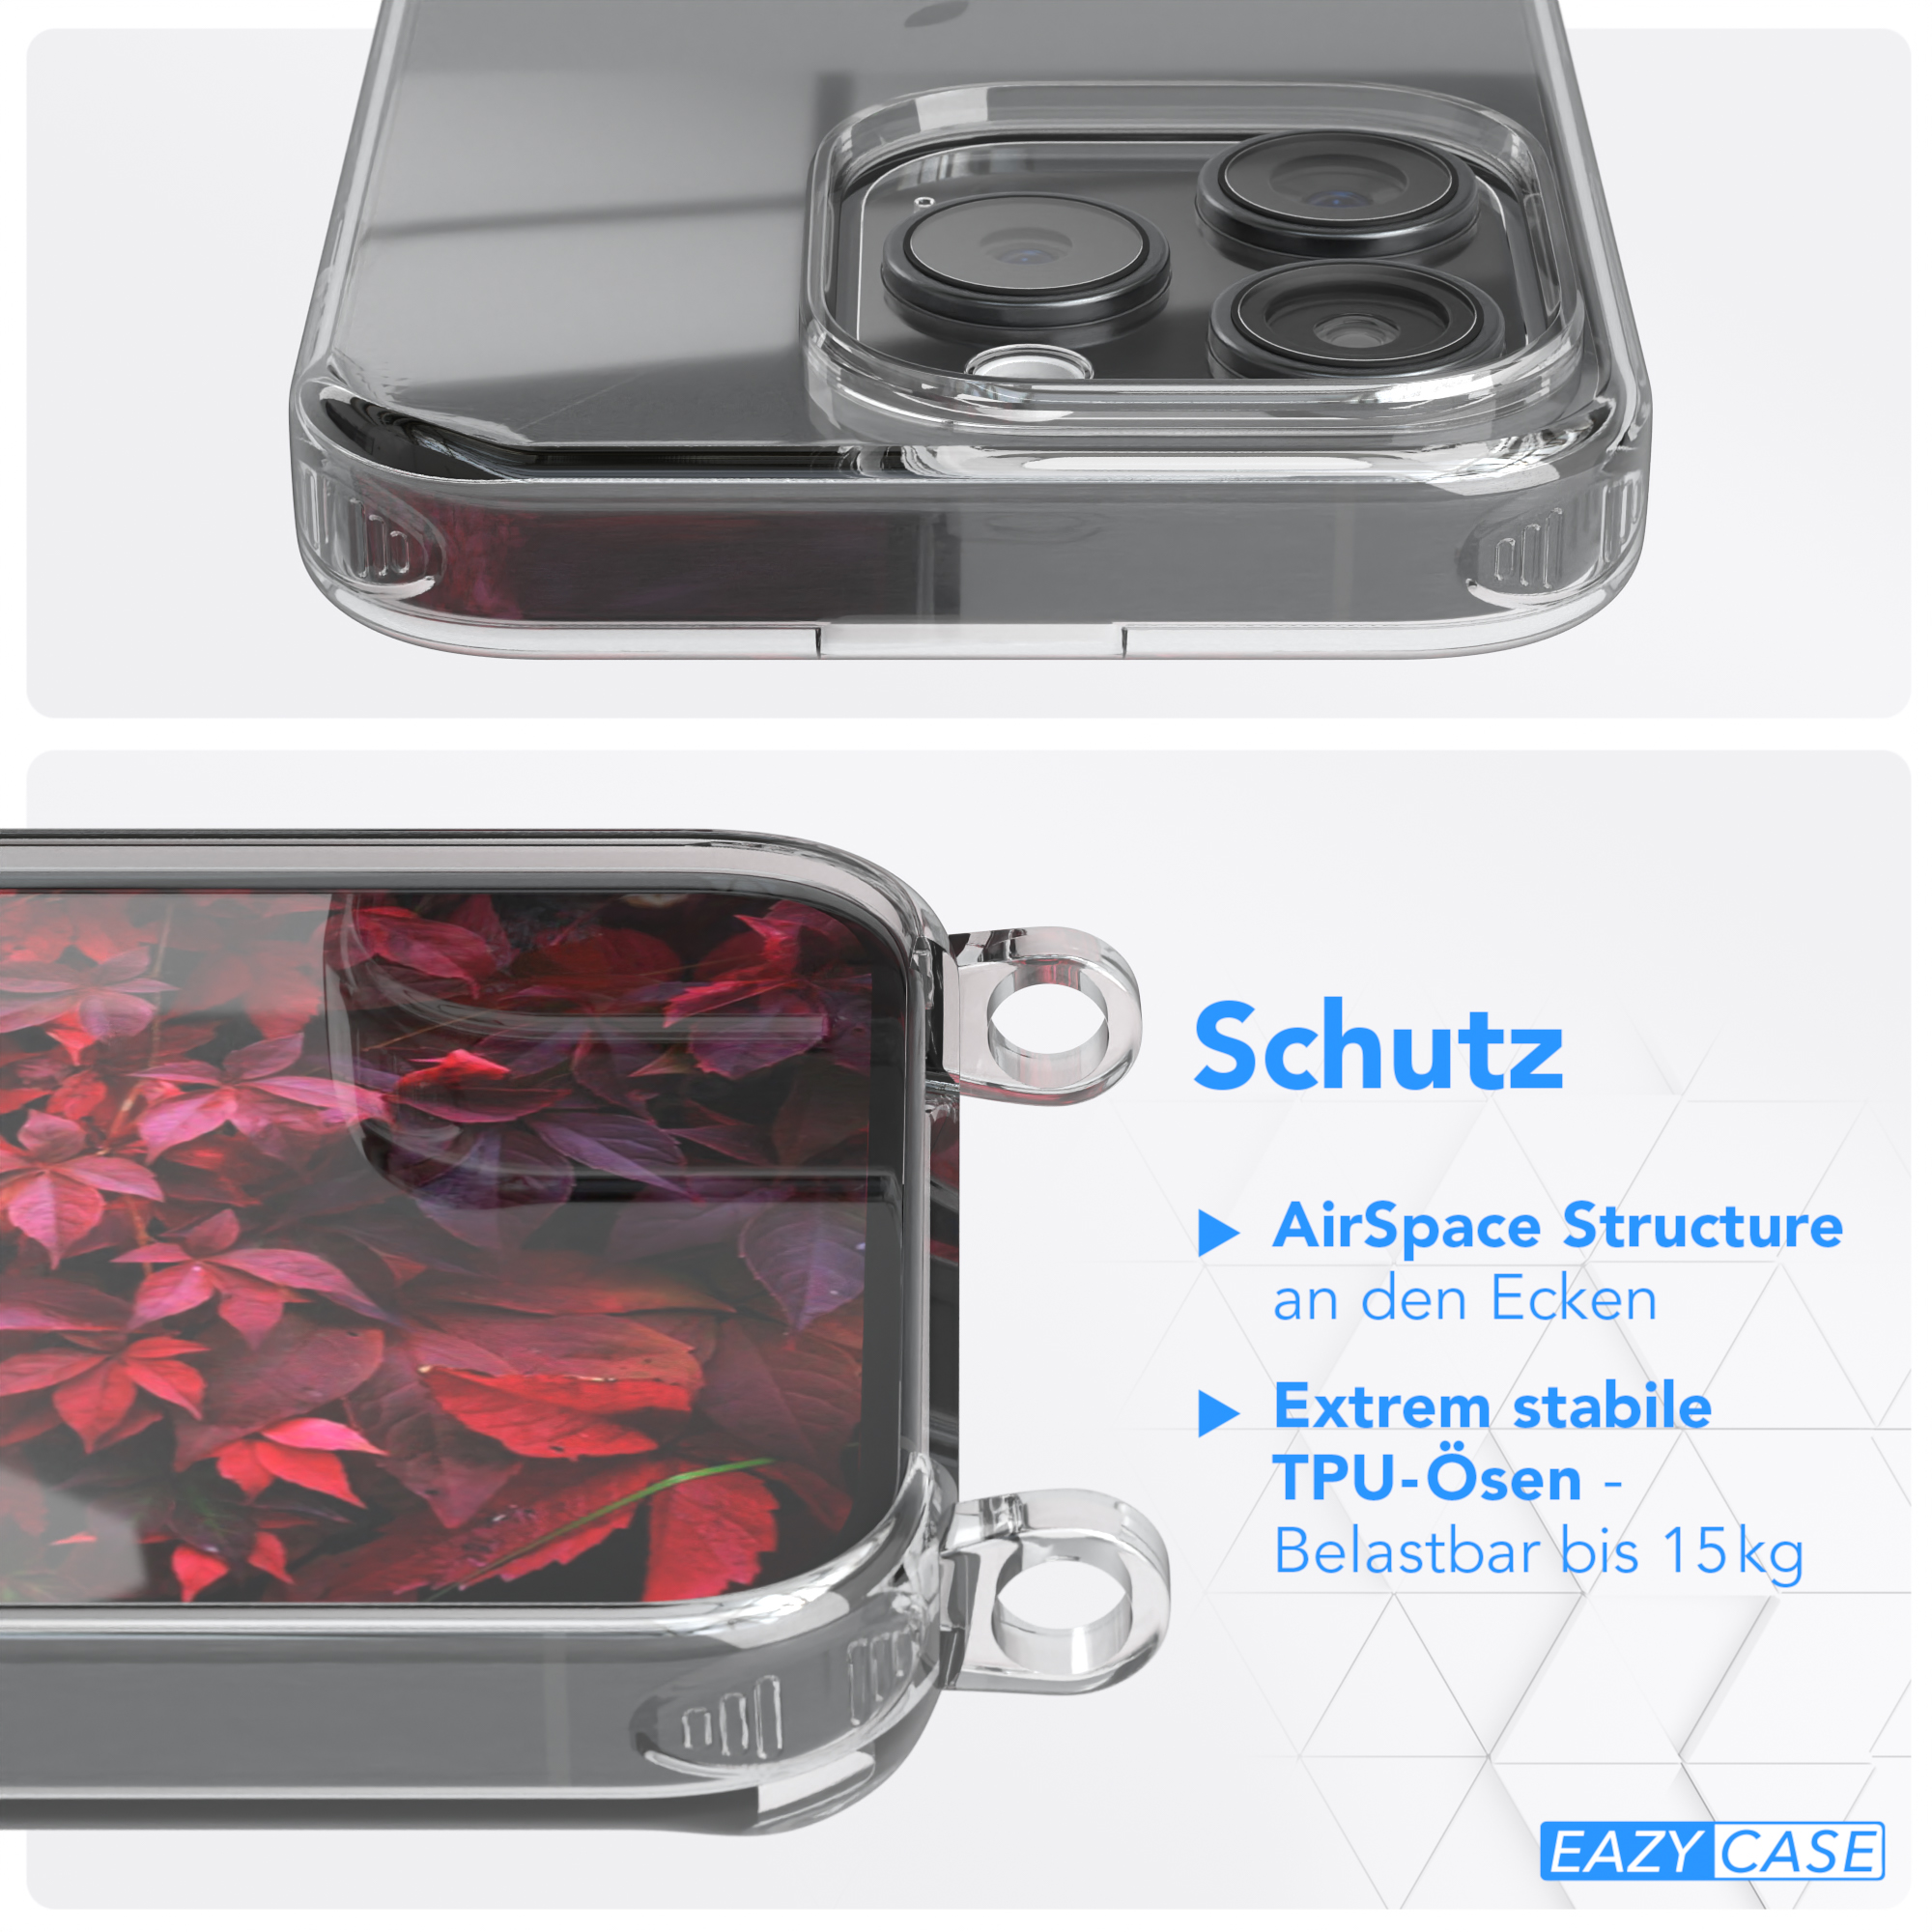 runder iPhone mit Umhängetasche, Pro, + EAZY Gold Bordeaux Kordel 15 Apple, Karabiner, / Handyhülle Transparente CASE